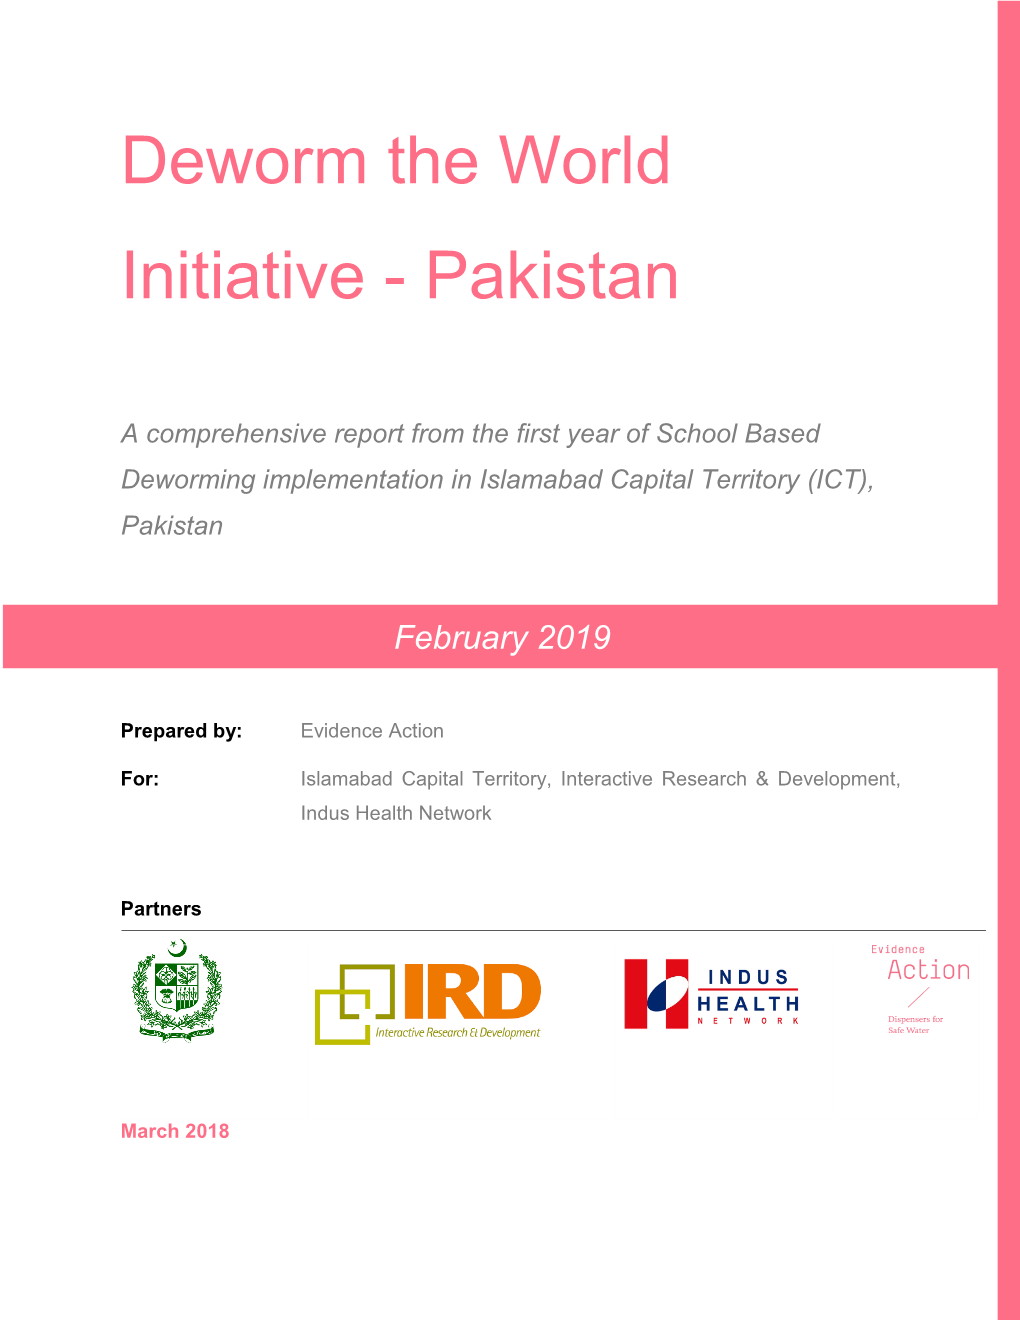 Deworm the World Initiative - Pakistan